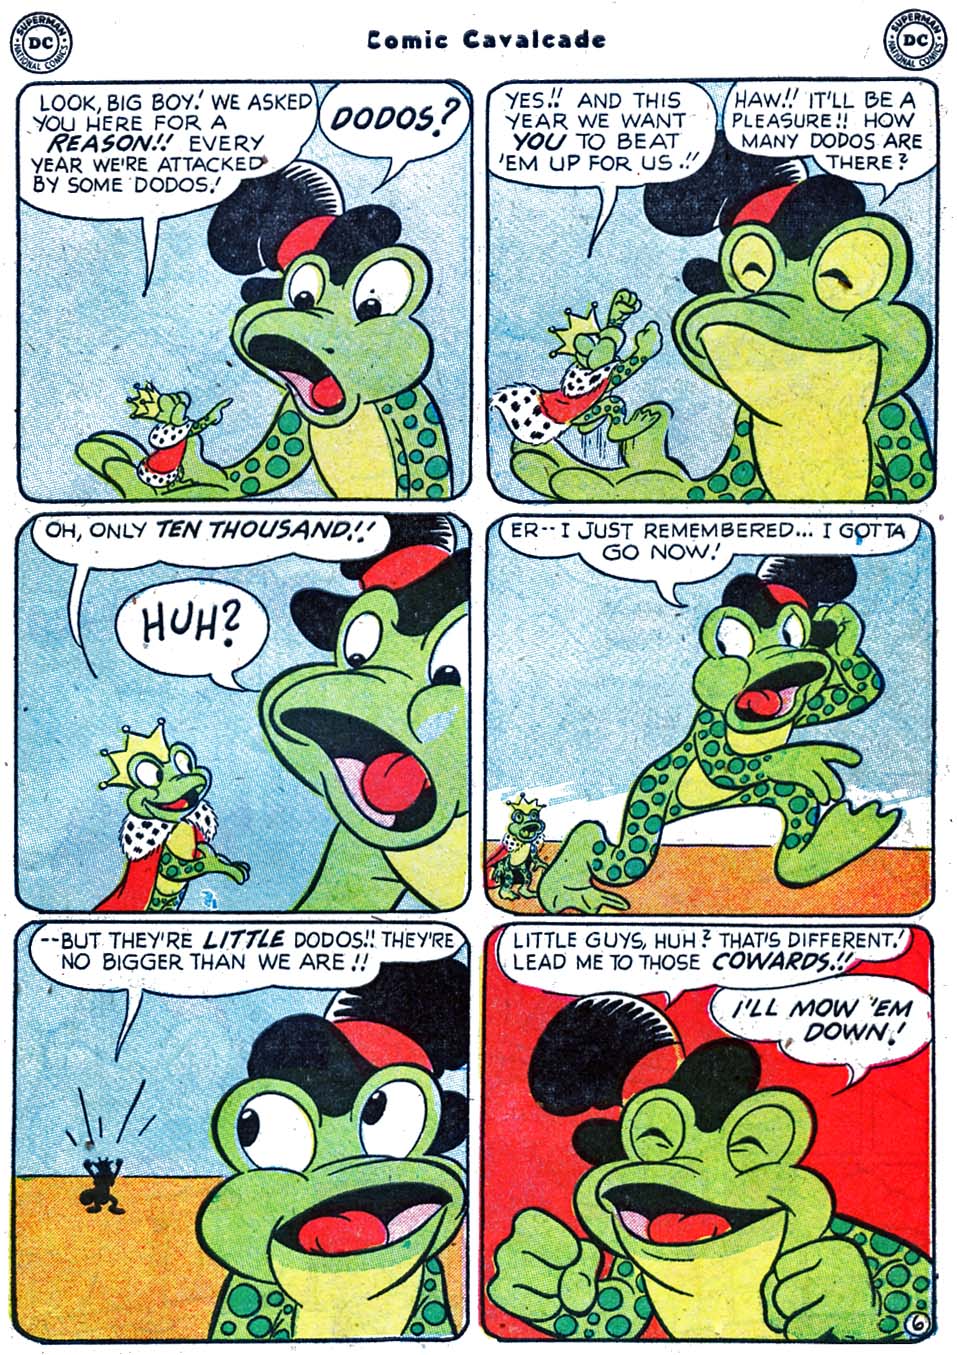 Comic Cavalcade issue 47 - Page 69